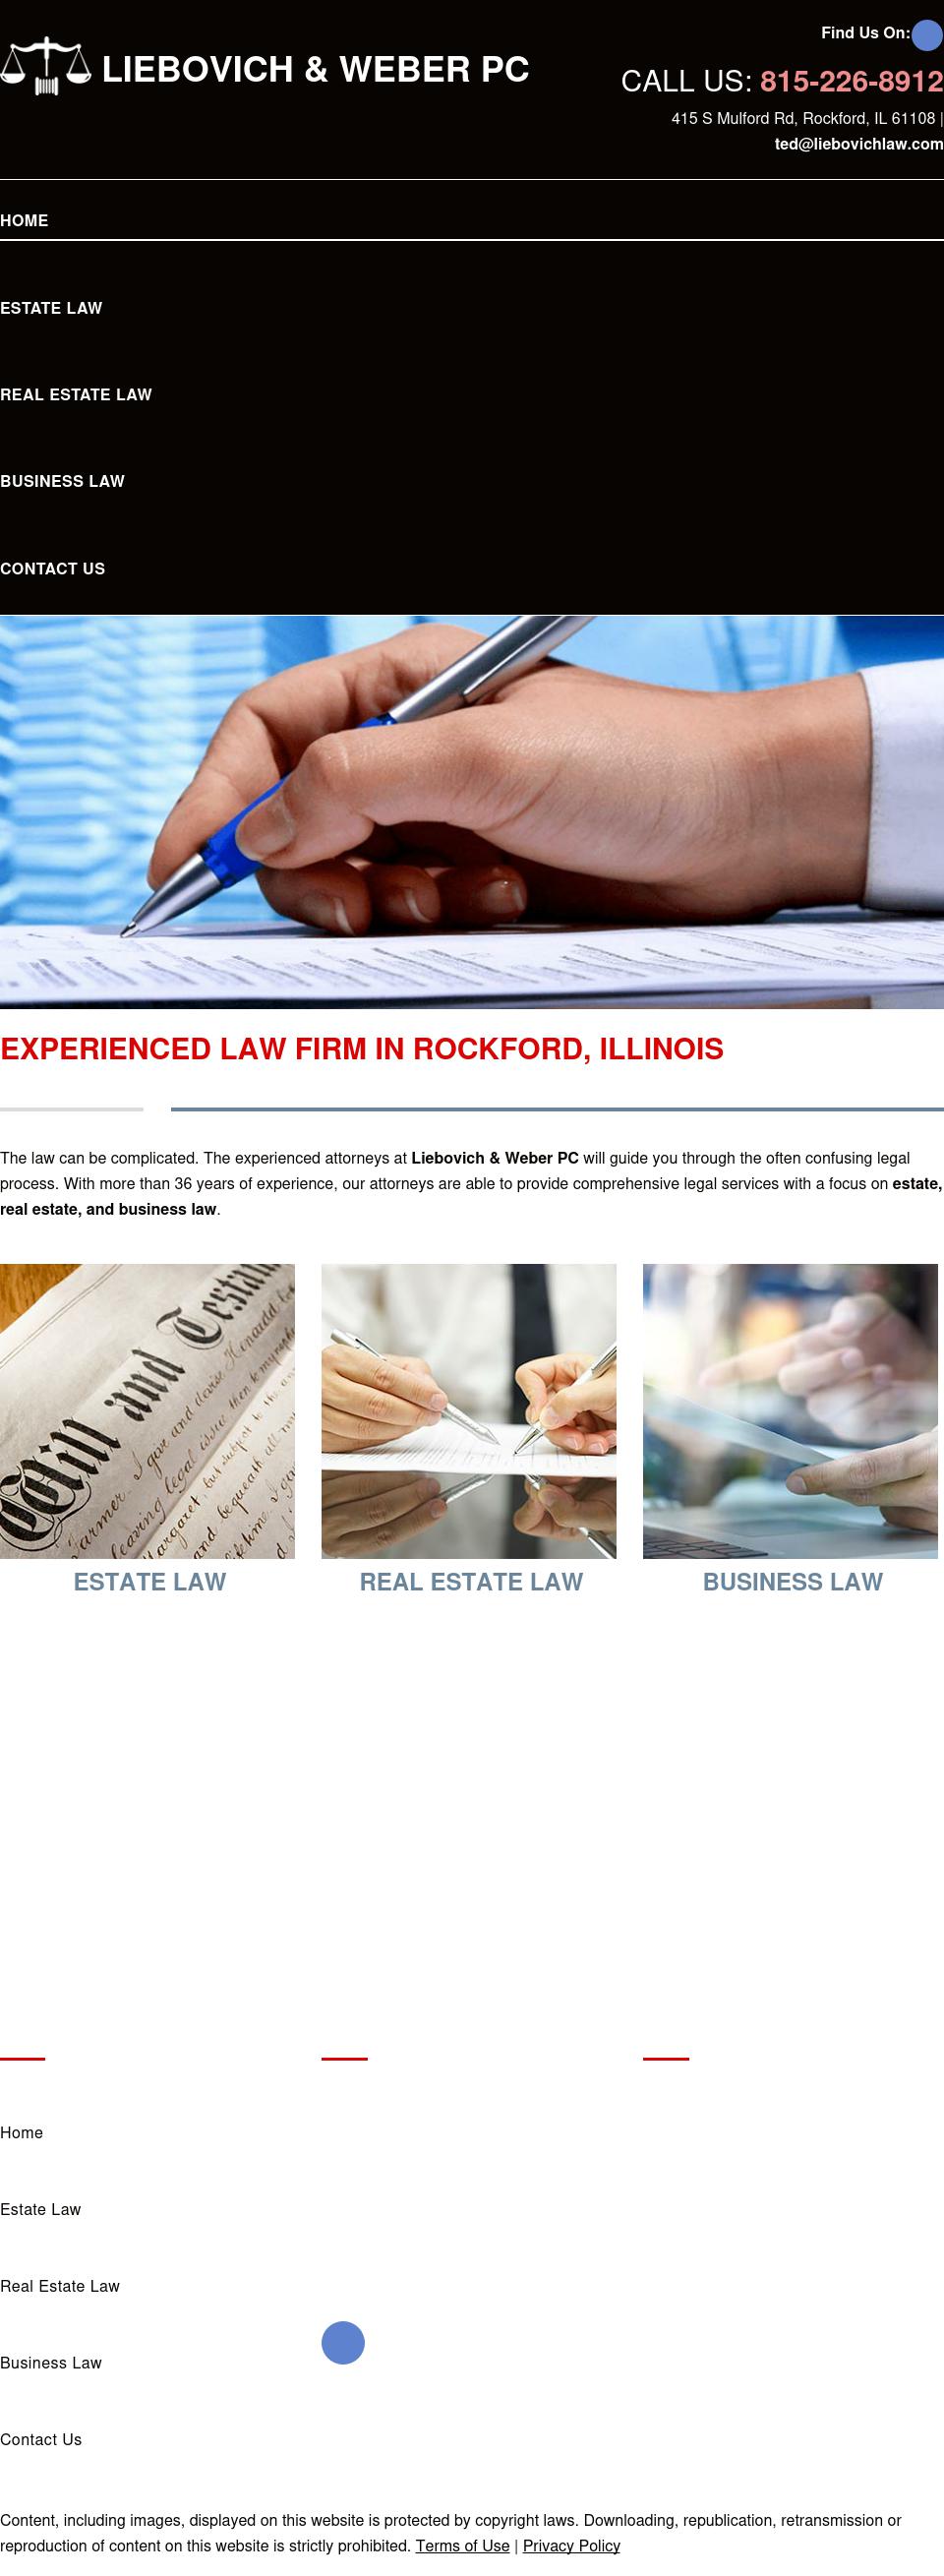 Liebovich & Weber PC - Rockford IL Lawyers